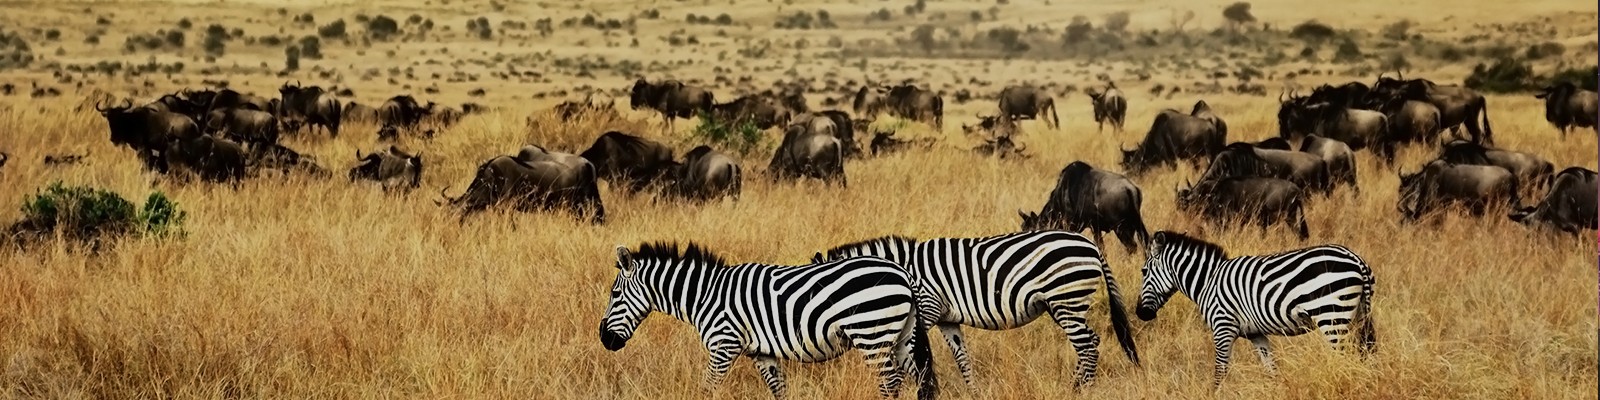 kenya safari honeymoon packages header